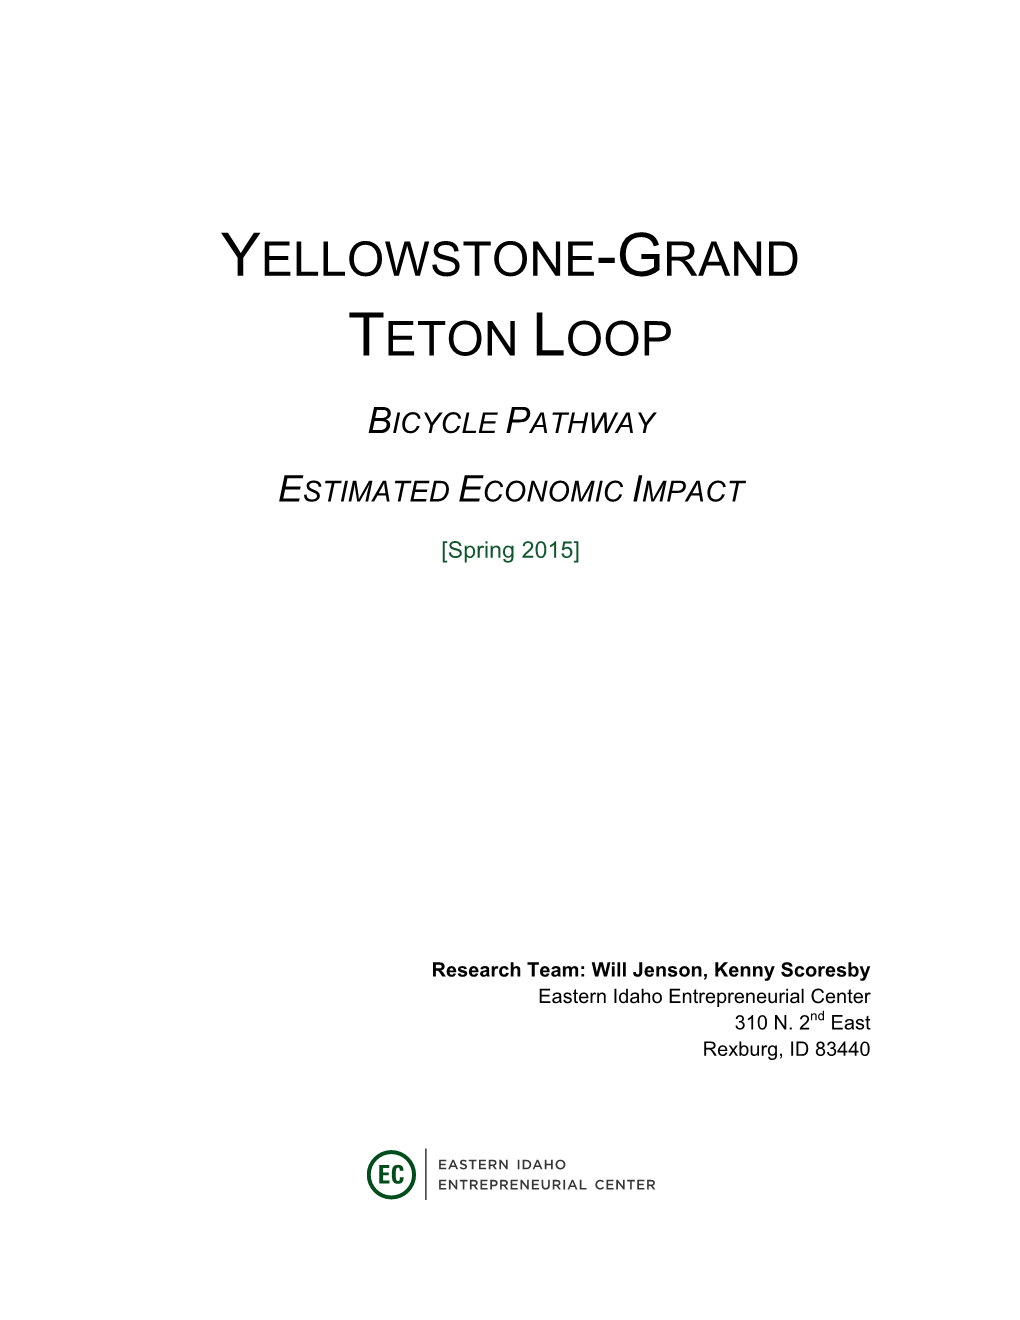 Yellowstone-Grand Teton Loop